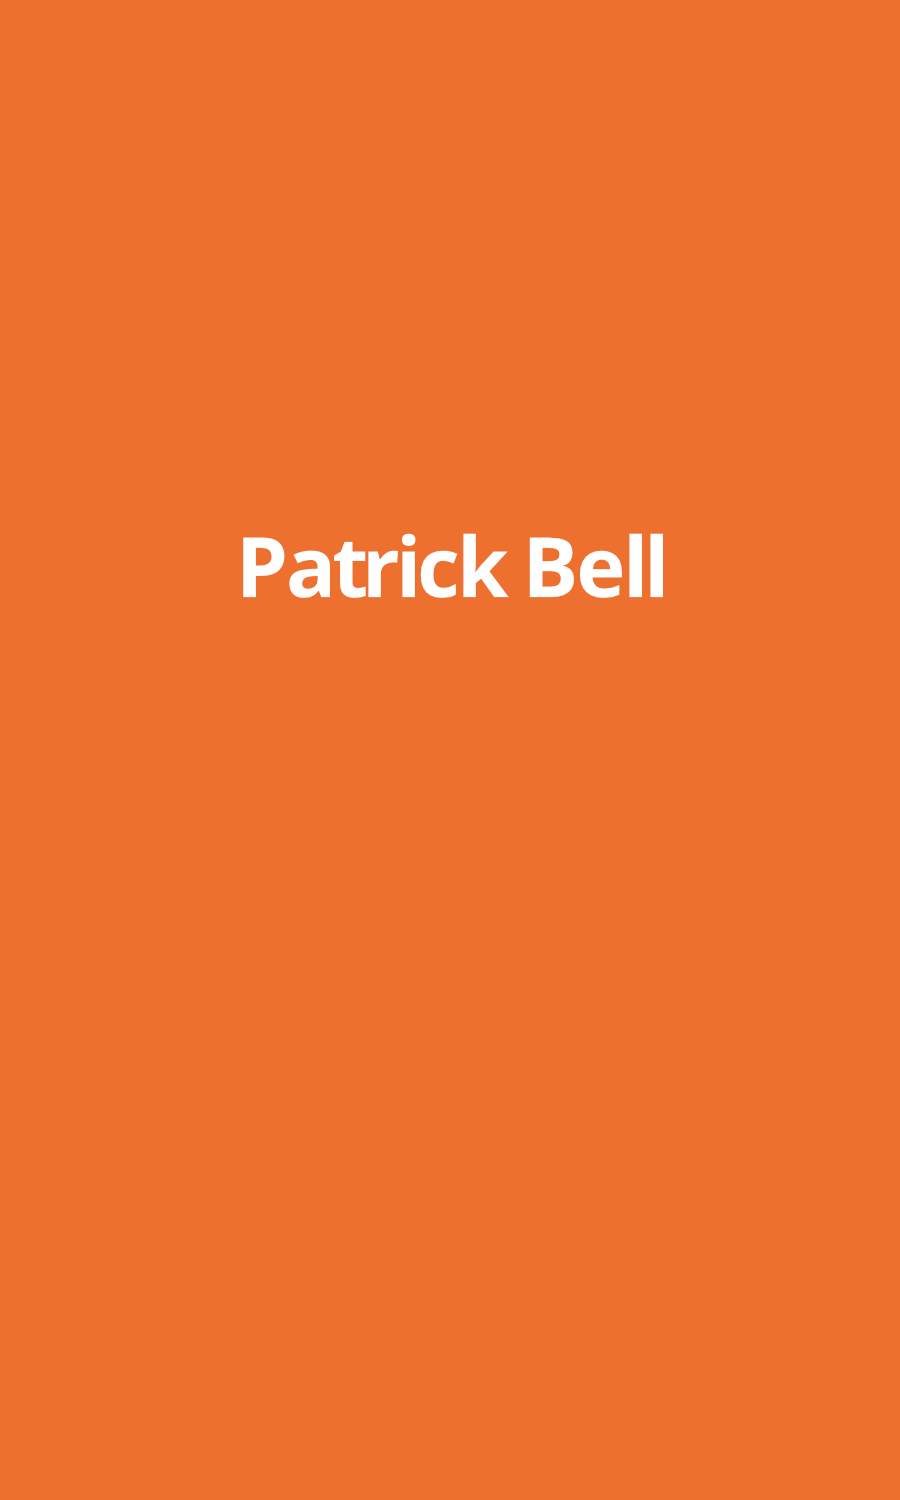 Patrick Bell